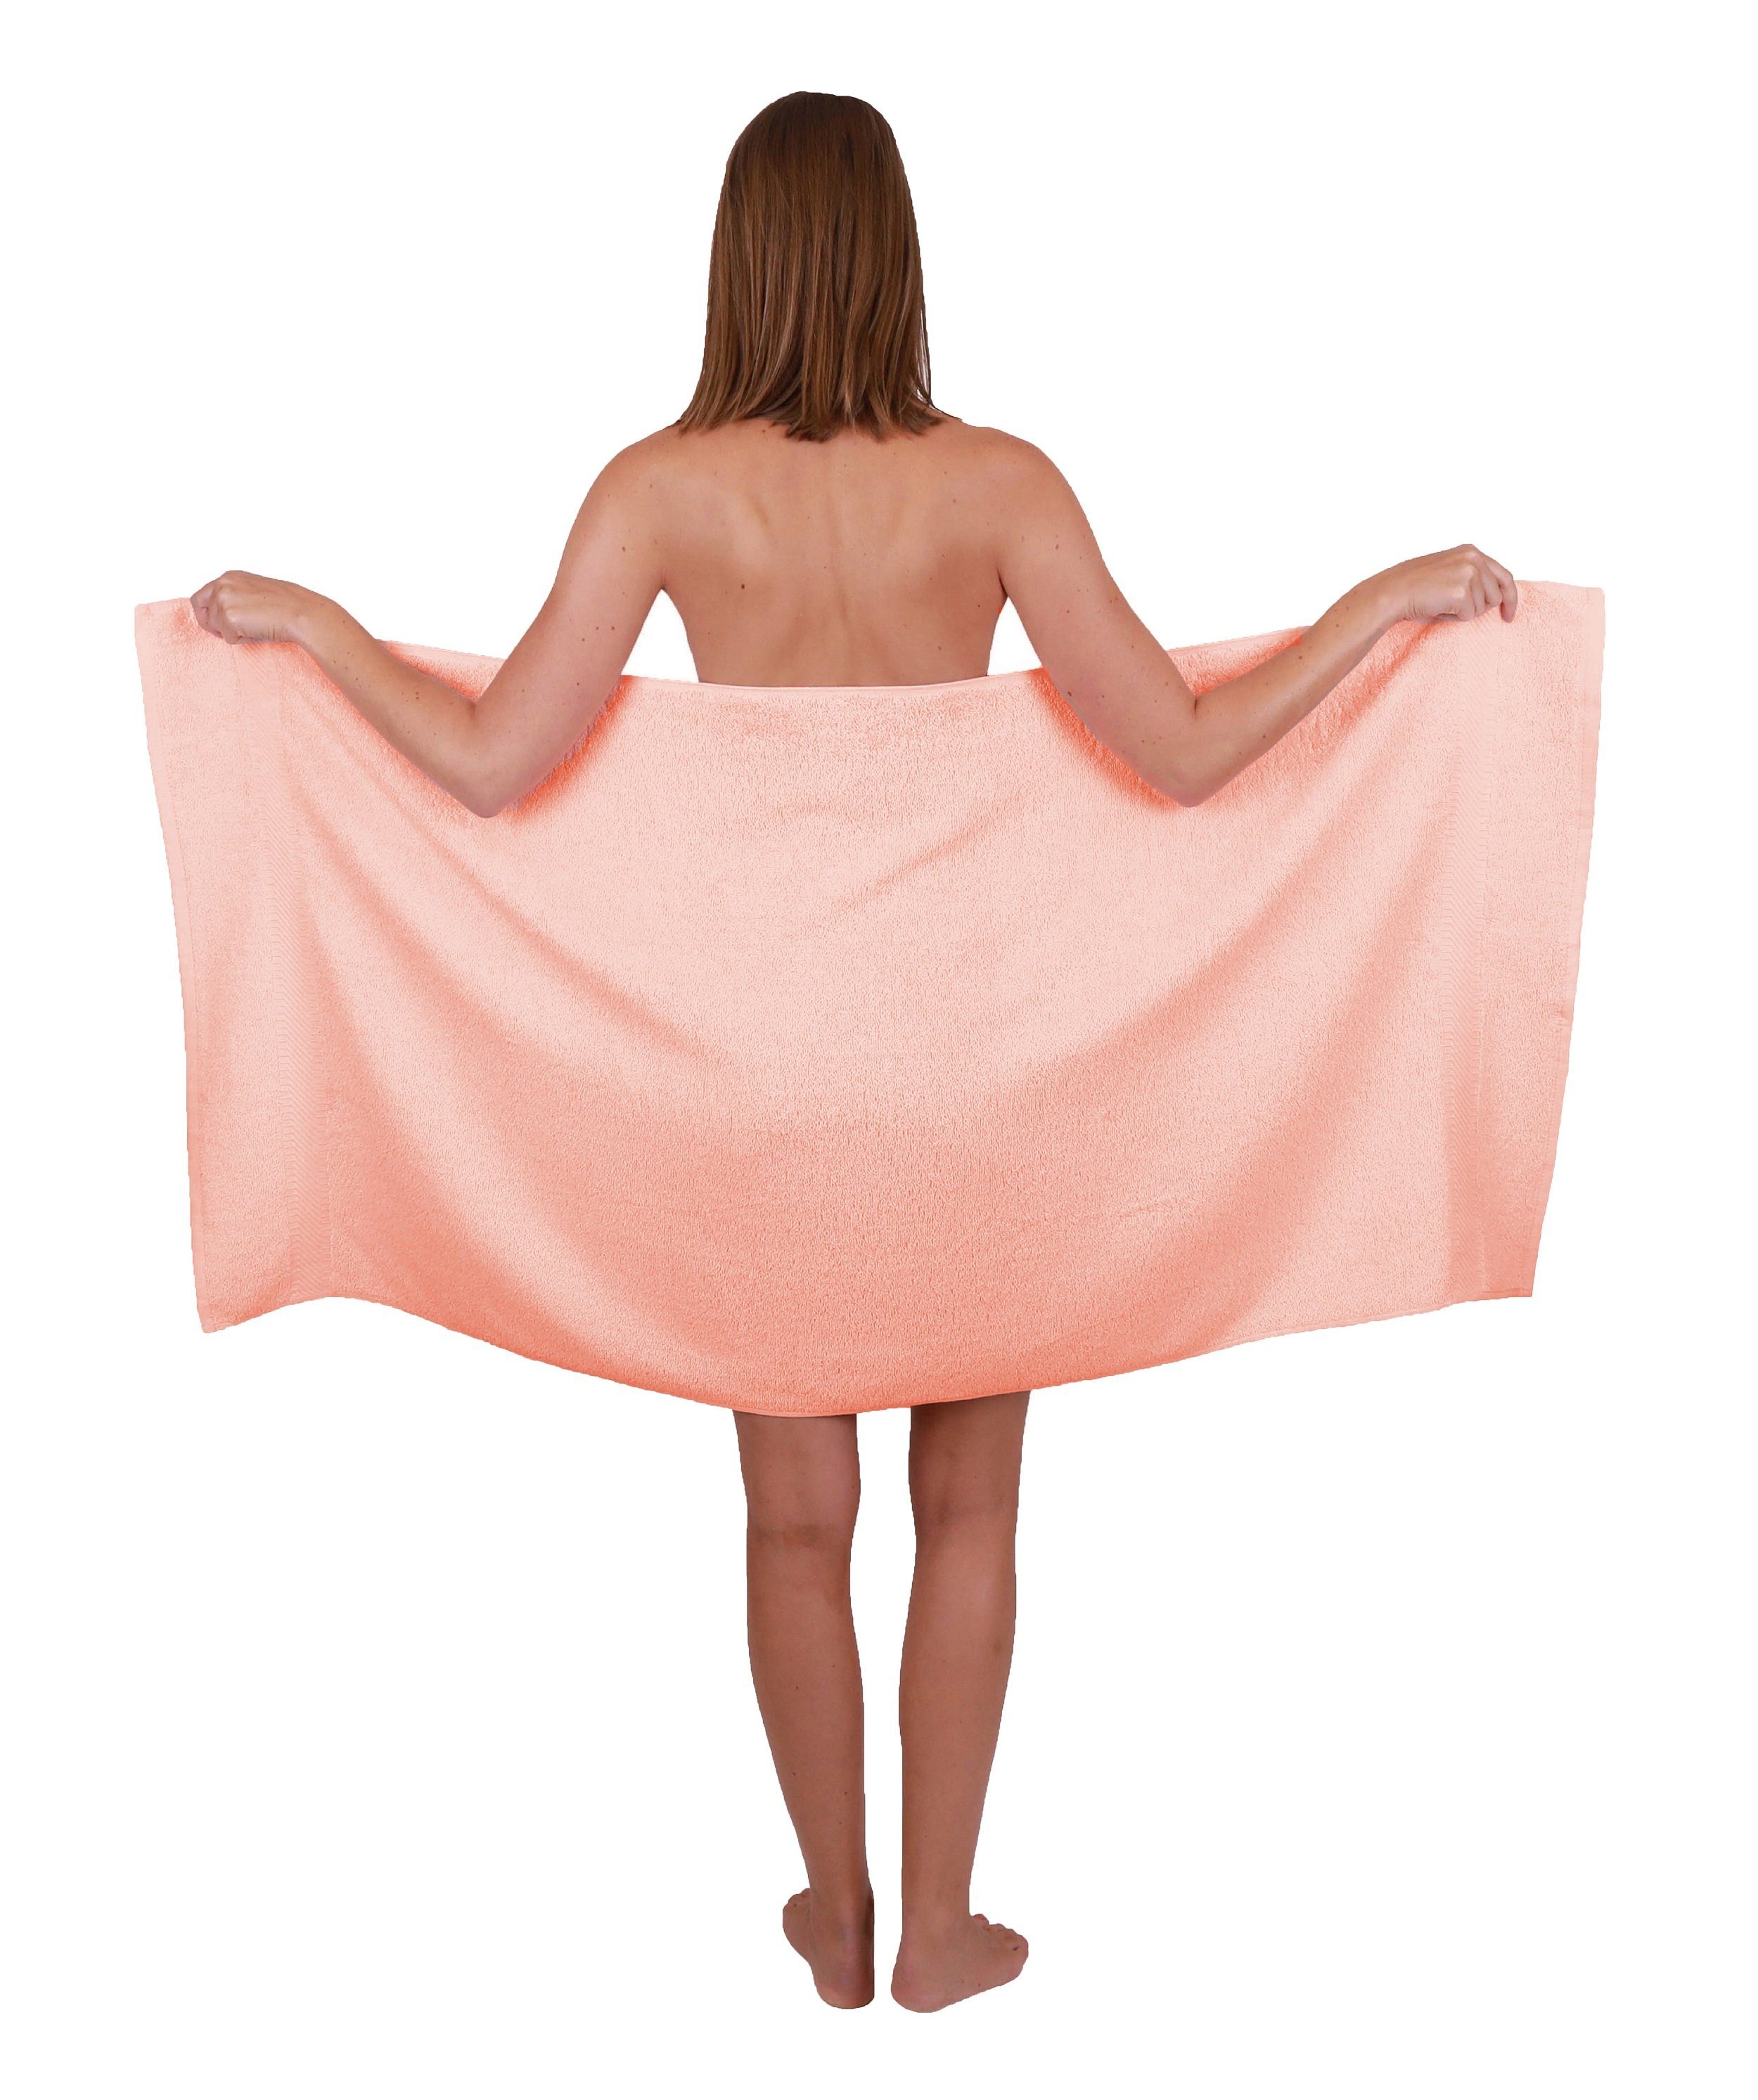 Baumwolle Palermo 4 x cm Set Stück Duschtücher Betz Duschtuch 100% Duschhandtuch Größe 70 rosé, Baumwolle und Farbe apricot Strandlaken 100% Duschtücher Badetuch 140